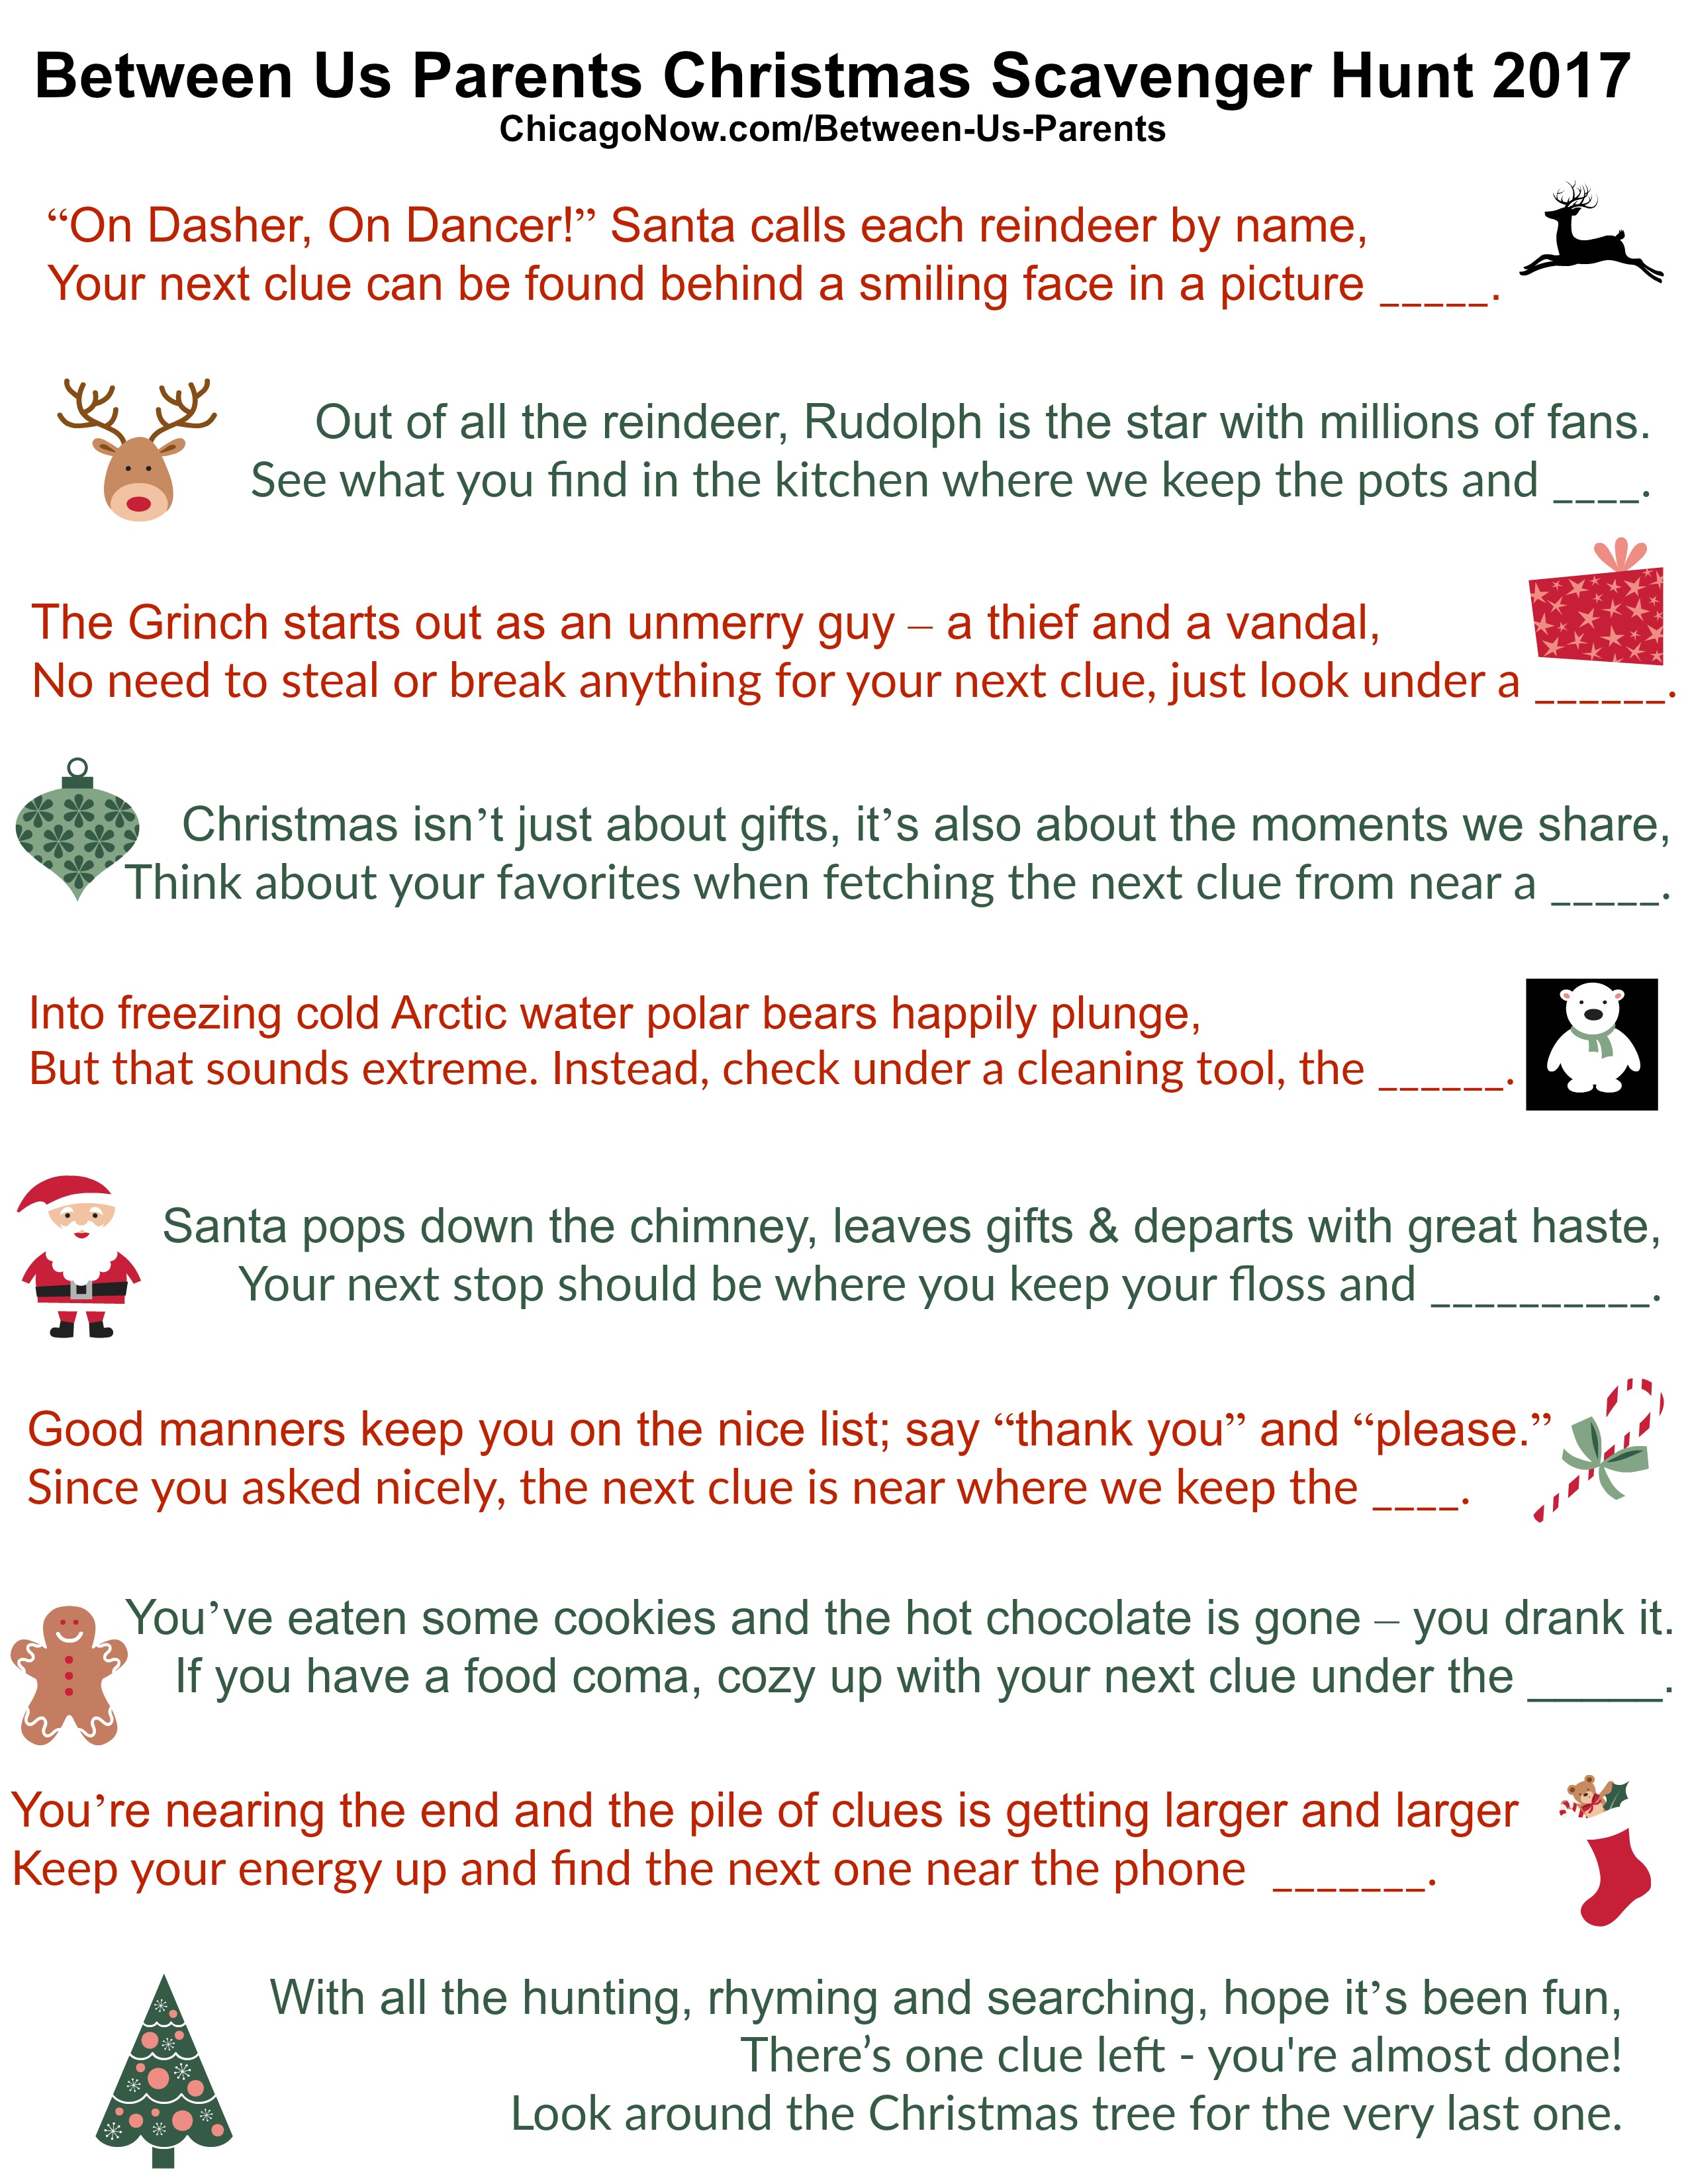 70 Printable Christmas scavenger hunt clues Between Us Parents